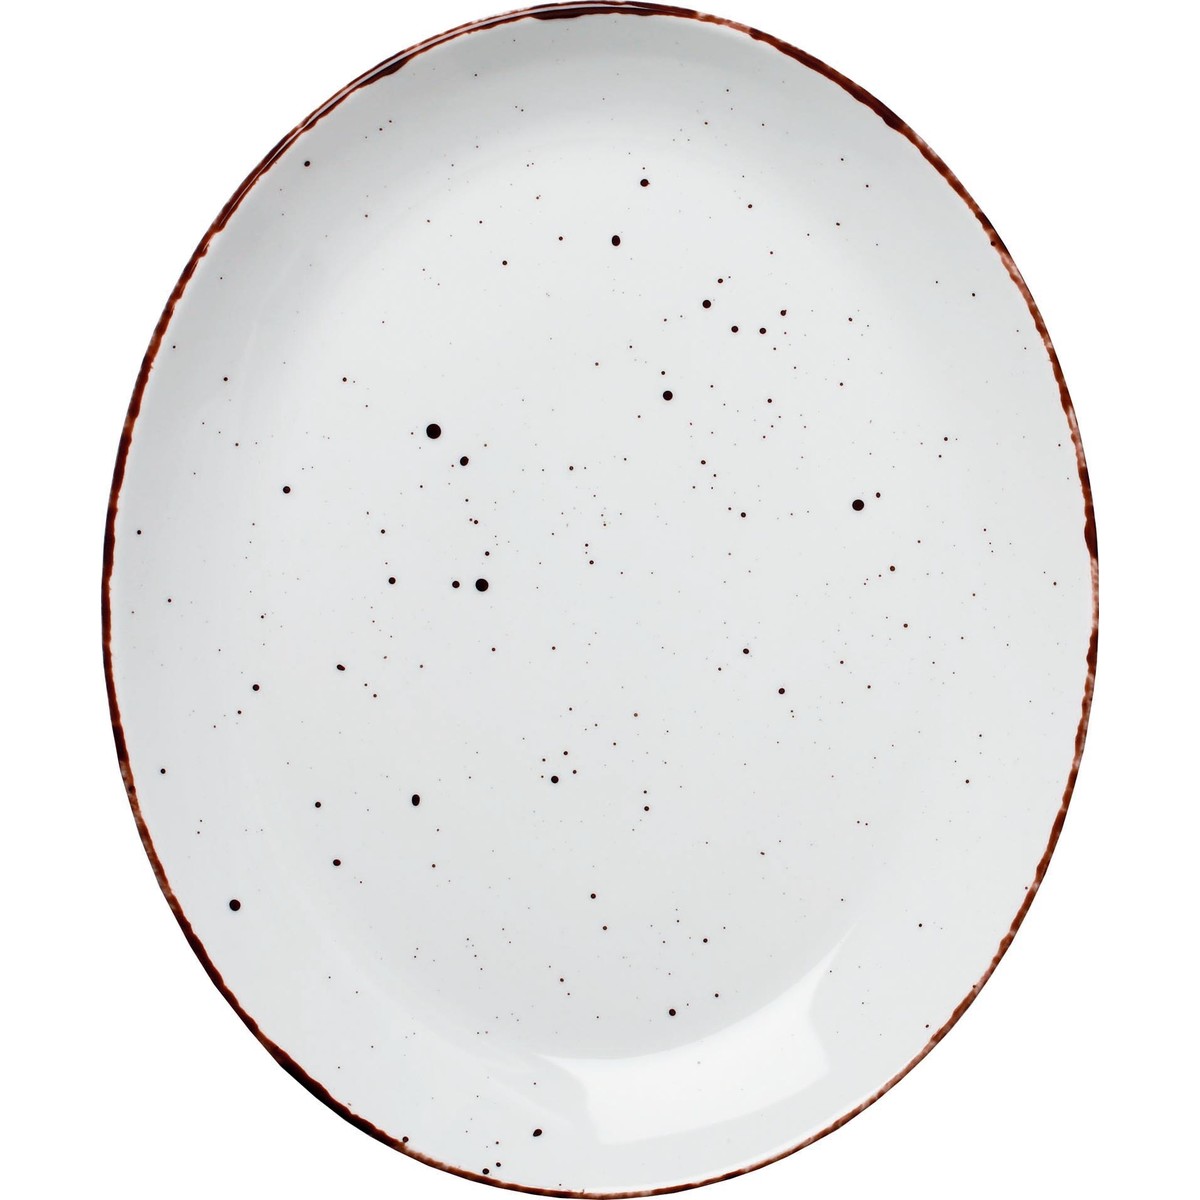 Porzellanserie "Granja" weiß Platte flach oval, 30,5x25,5 cm